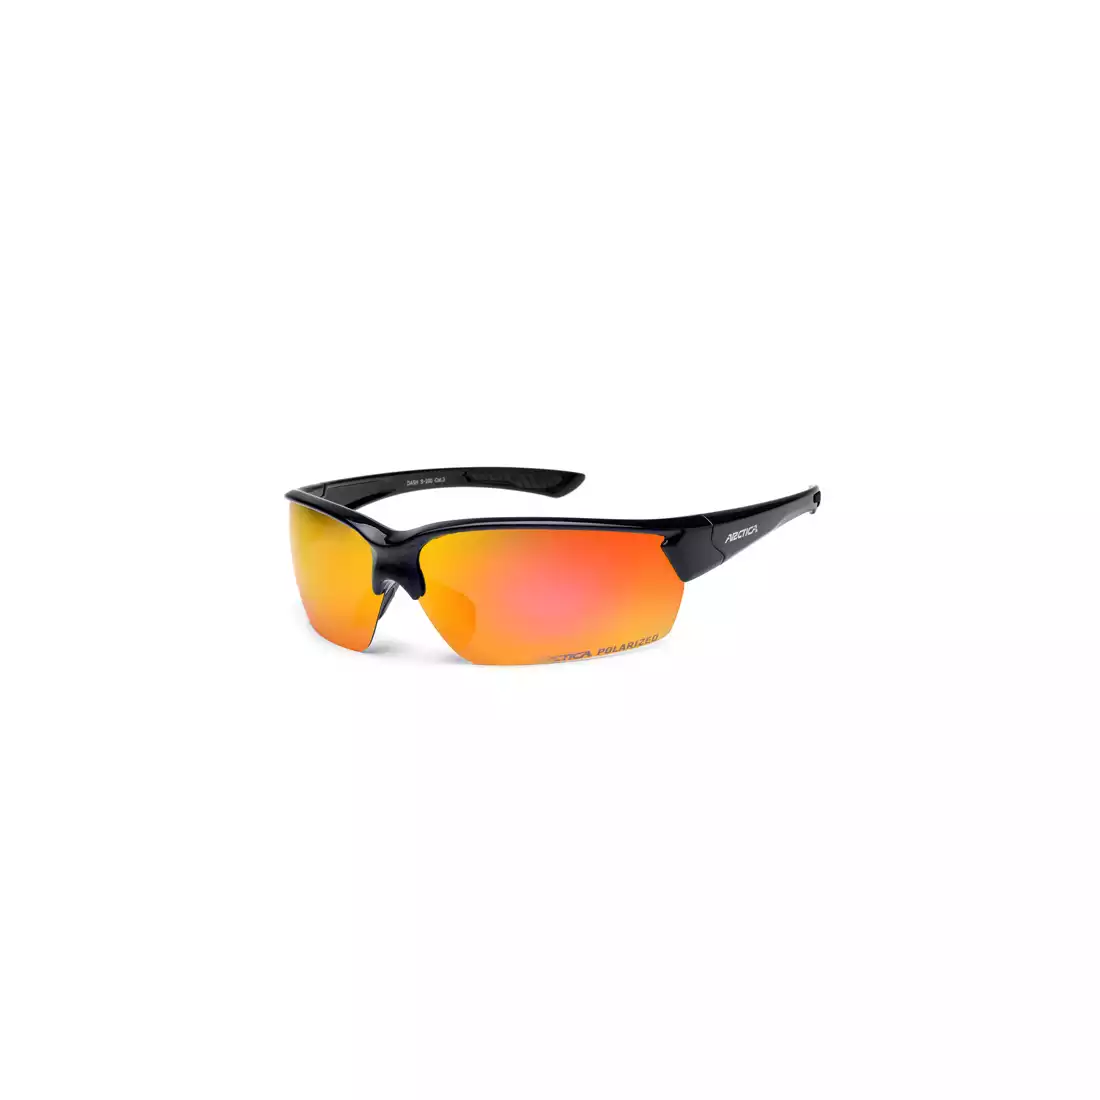 ARCTICA okulary rowerowe / sportowe, S 200